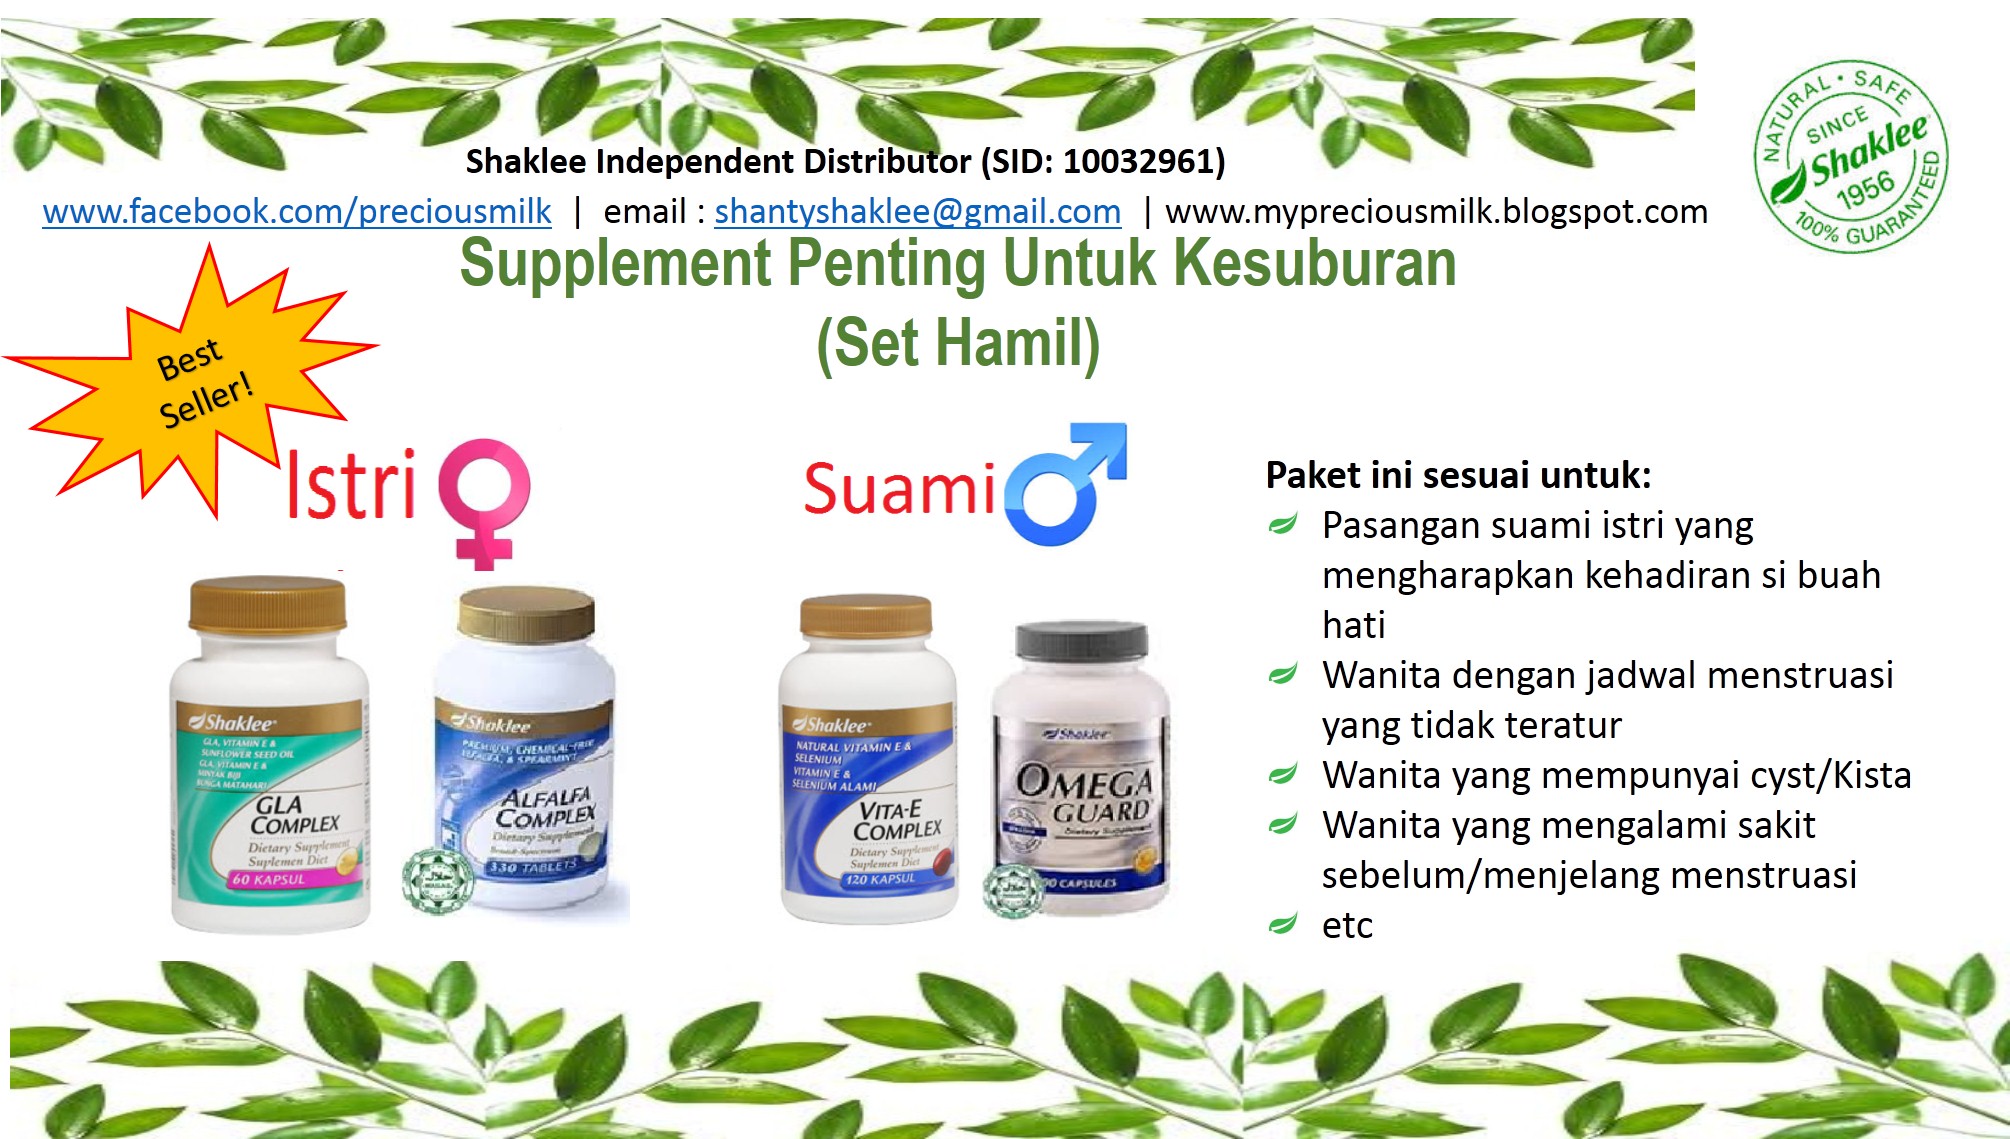 Katalog Produk Vitamin Shaklee Indonesia Vitamin Shaklee 